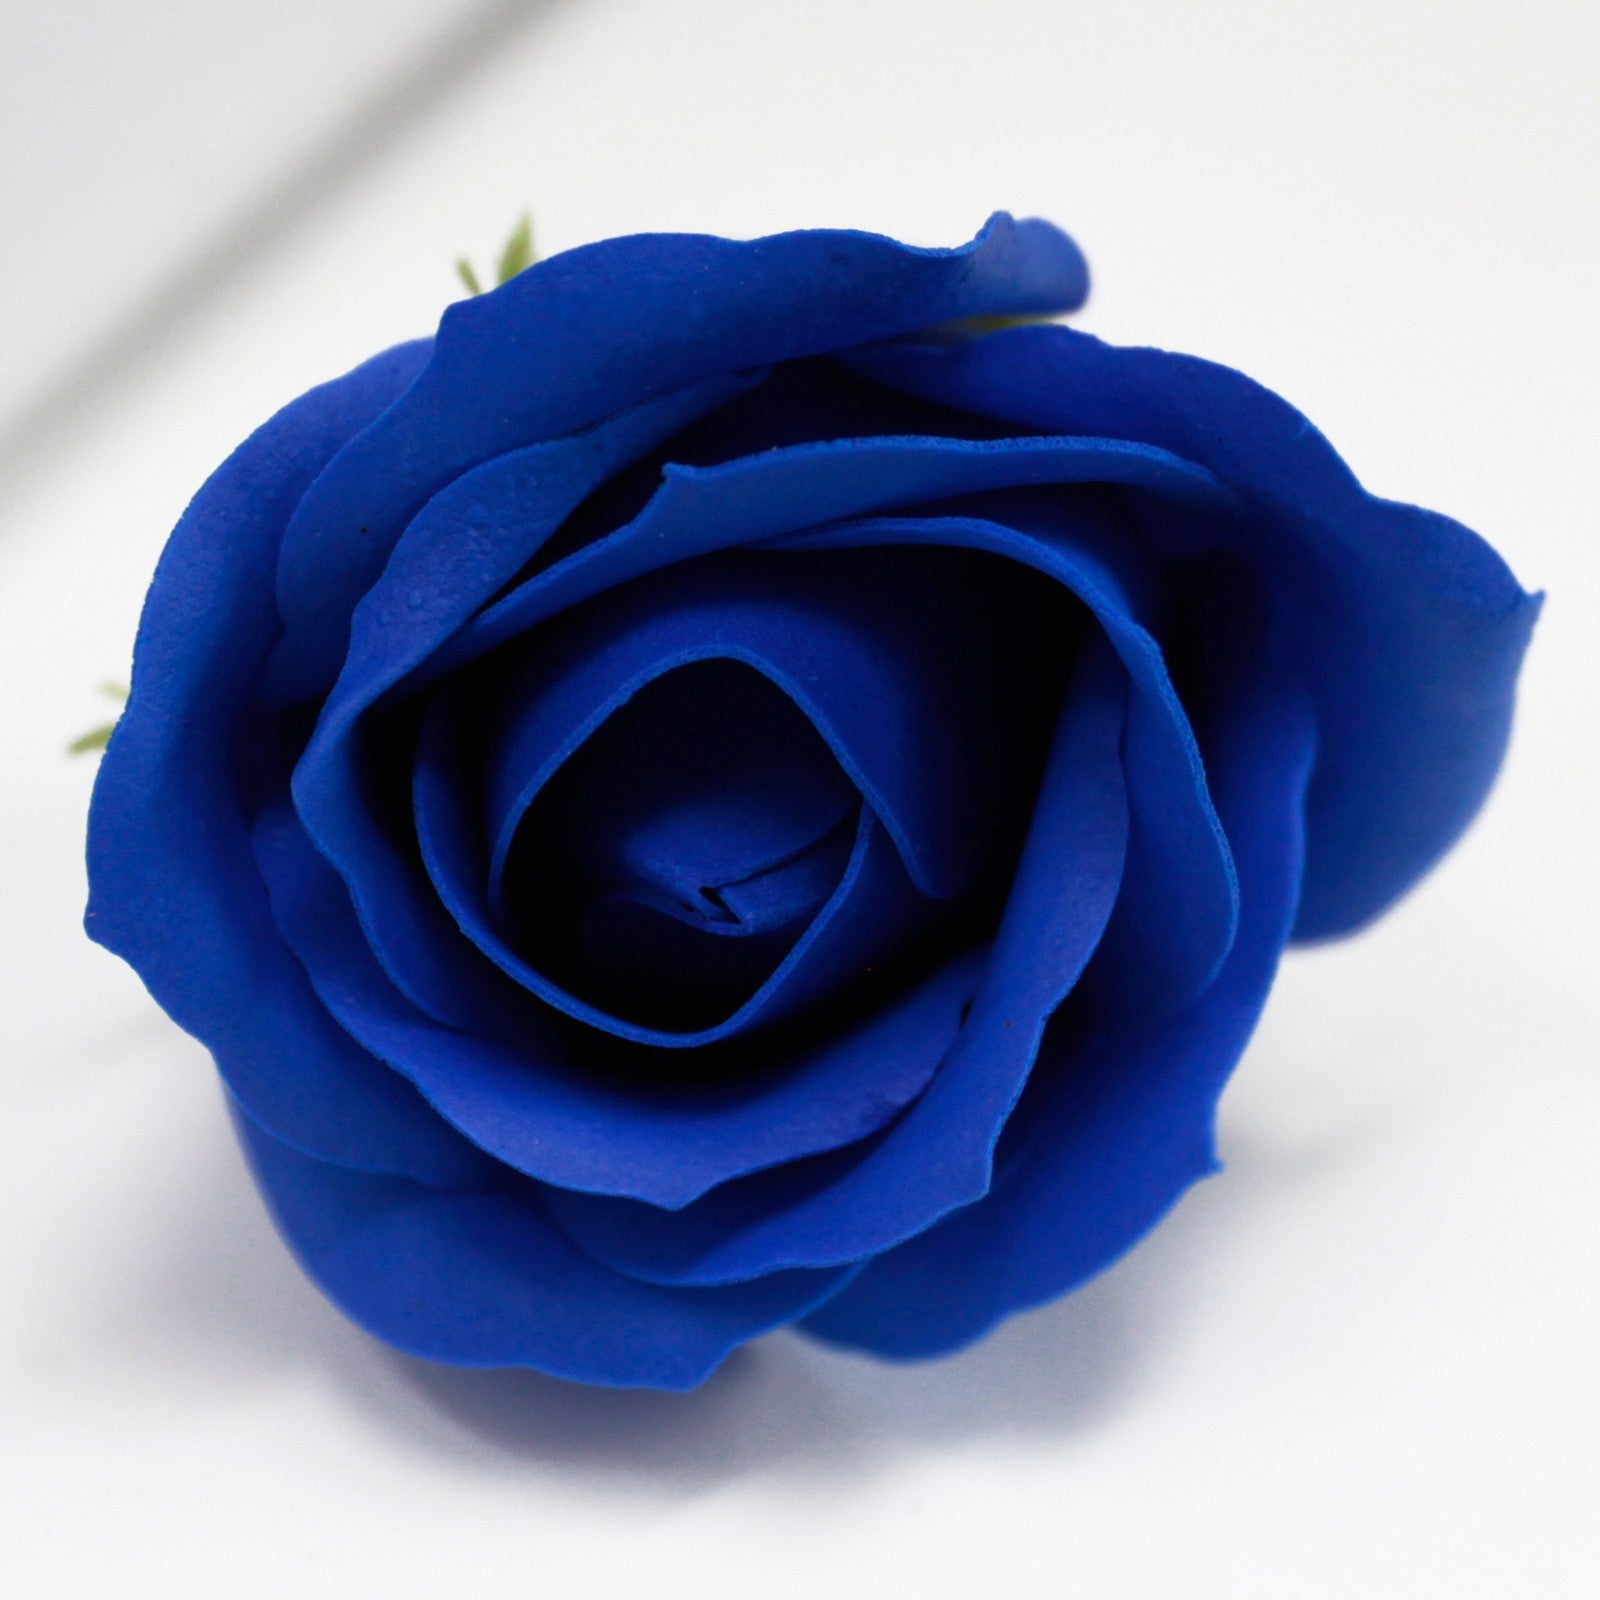 View Craft Soap Flowers Med Rose Royal Blue information